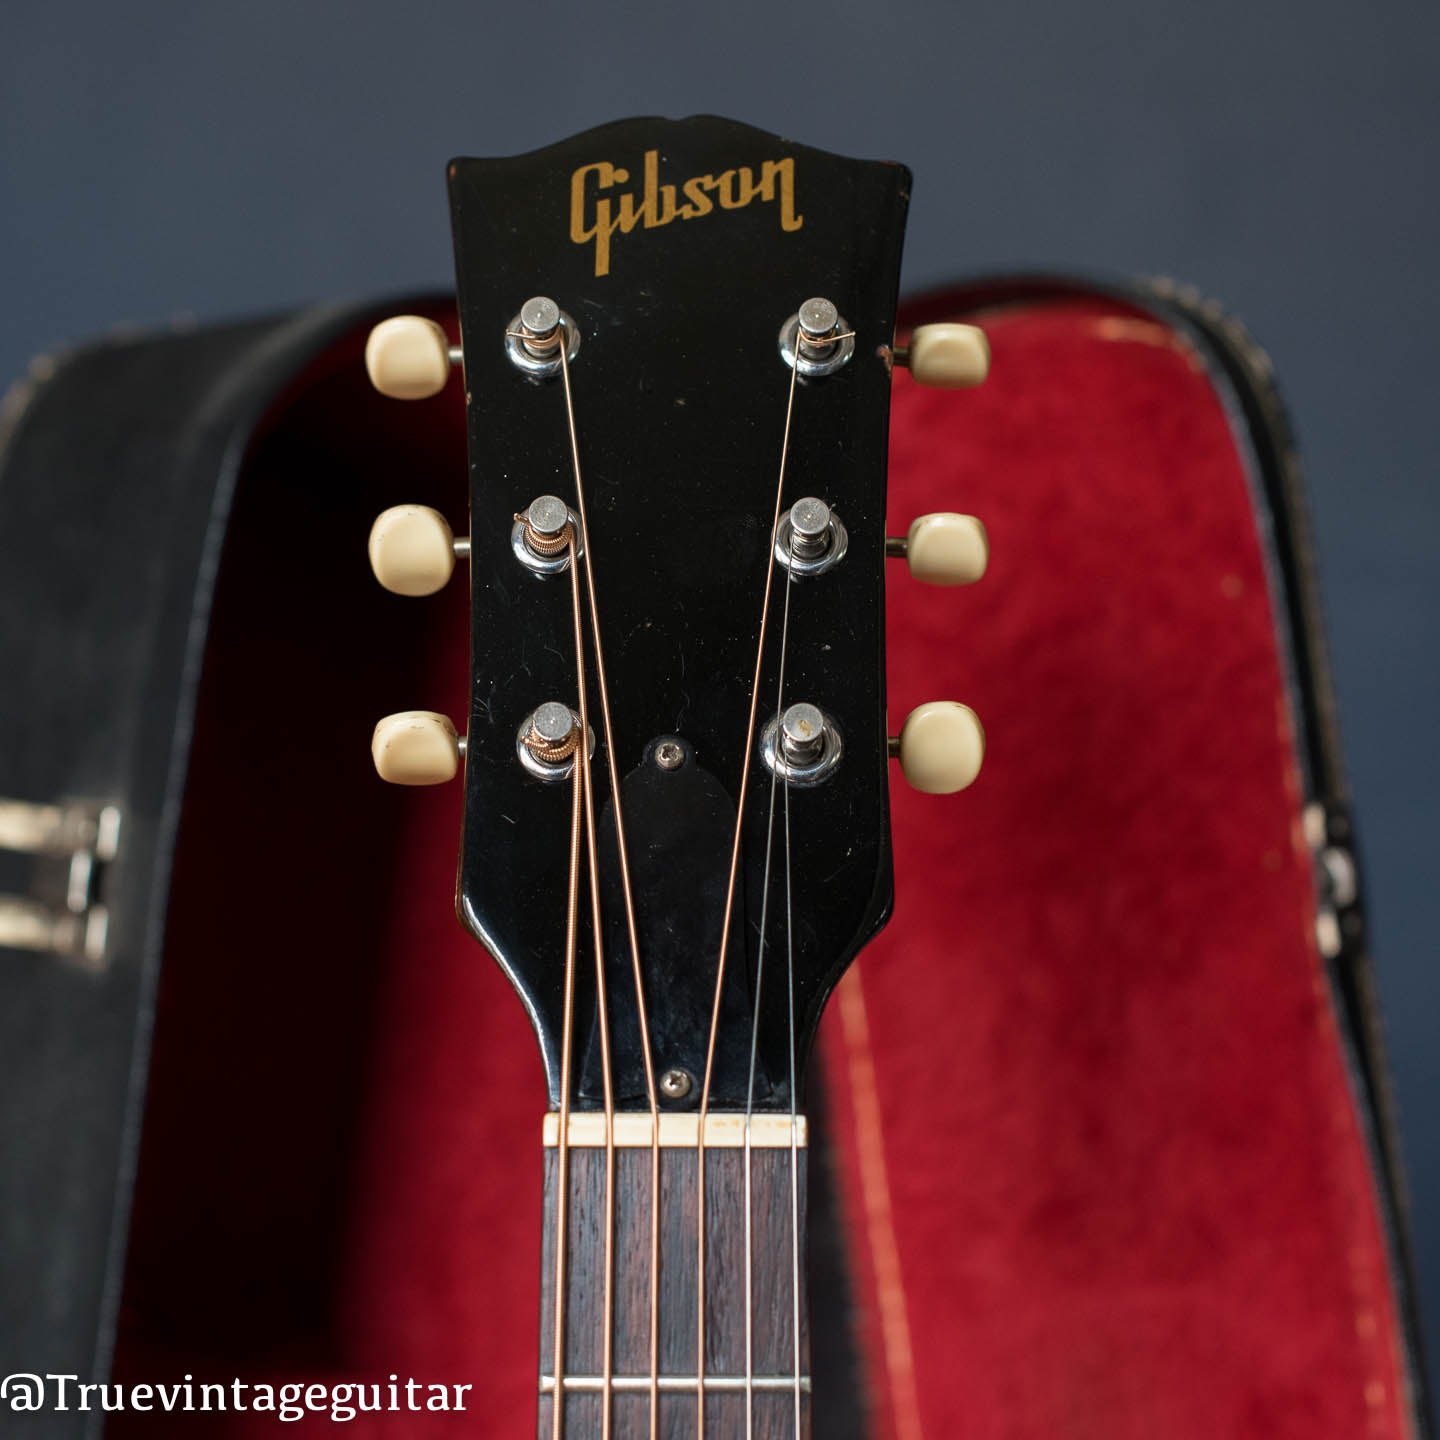 Gibson guitar headstock 1960s black